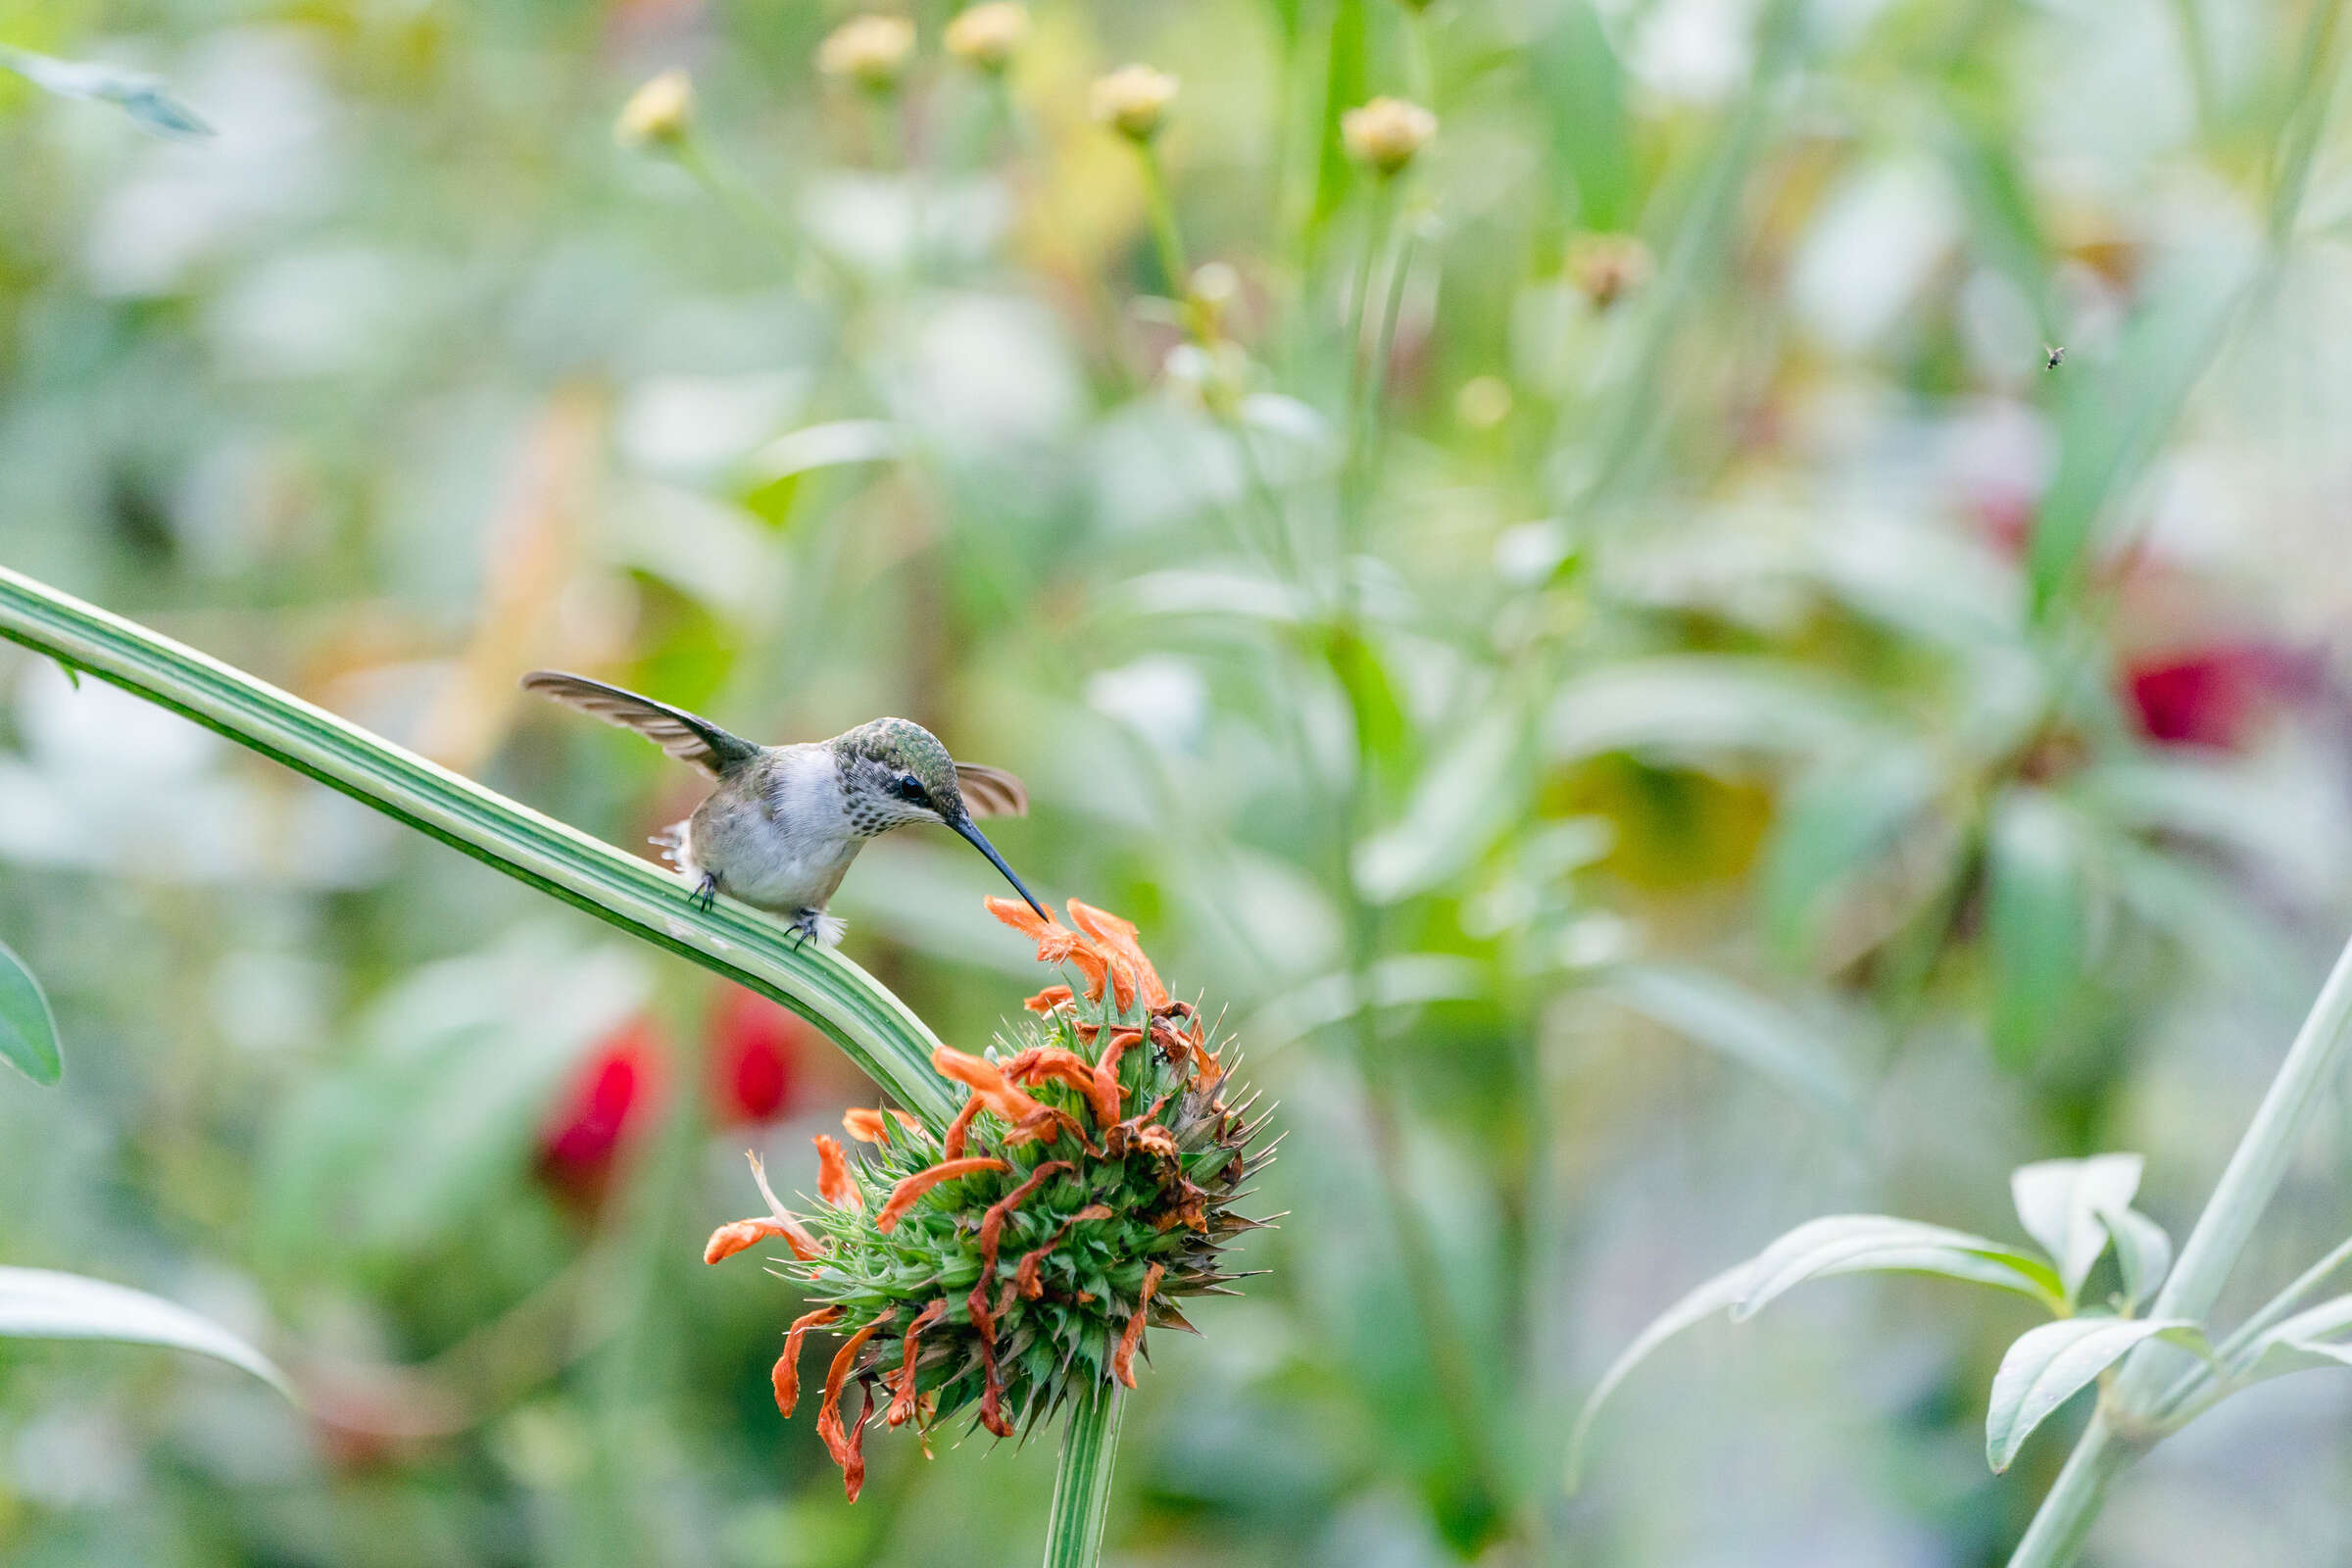 A hummingbird hunts and pecks for nectar among flowers